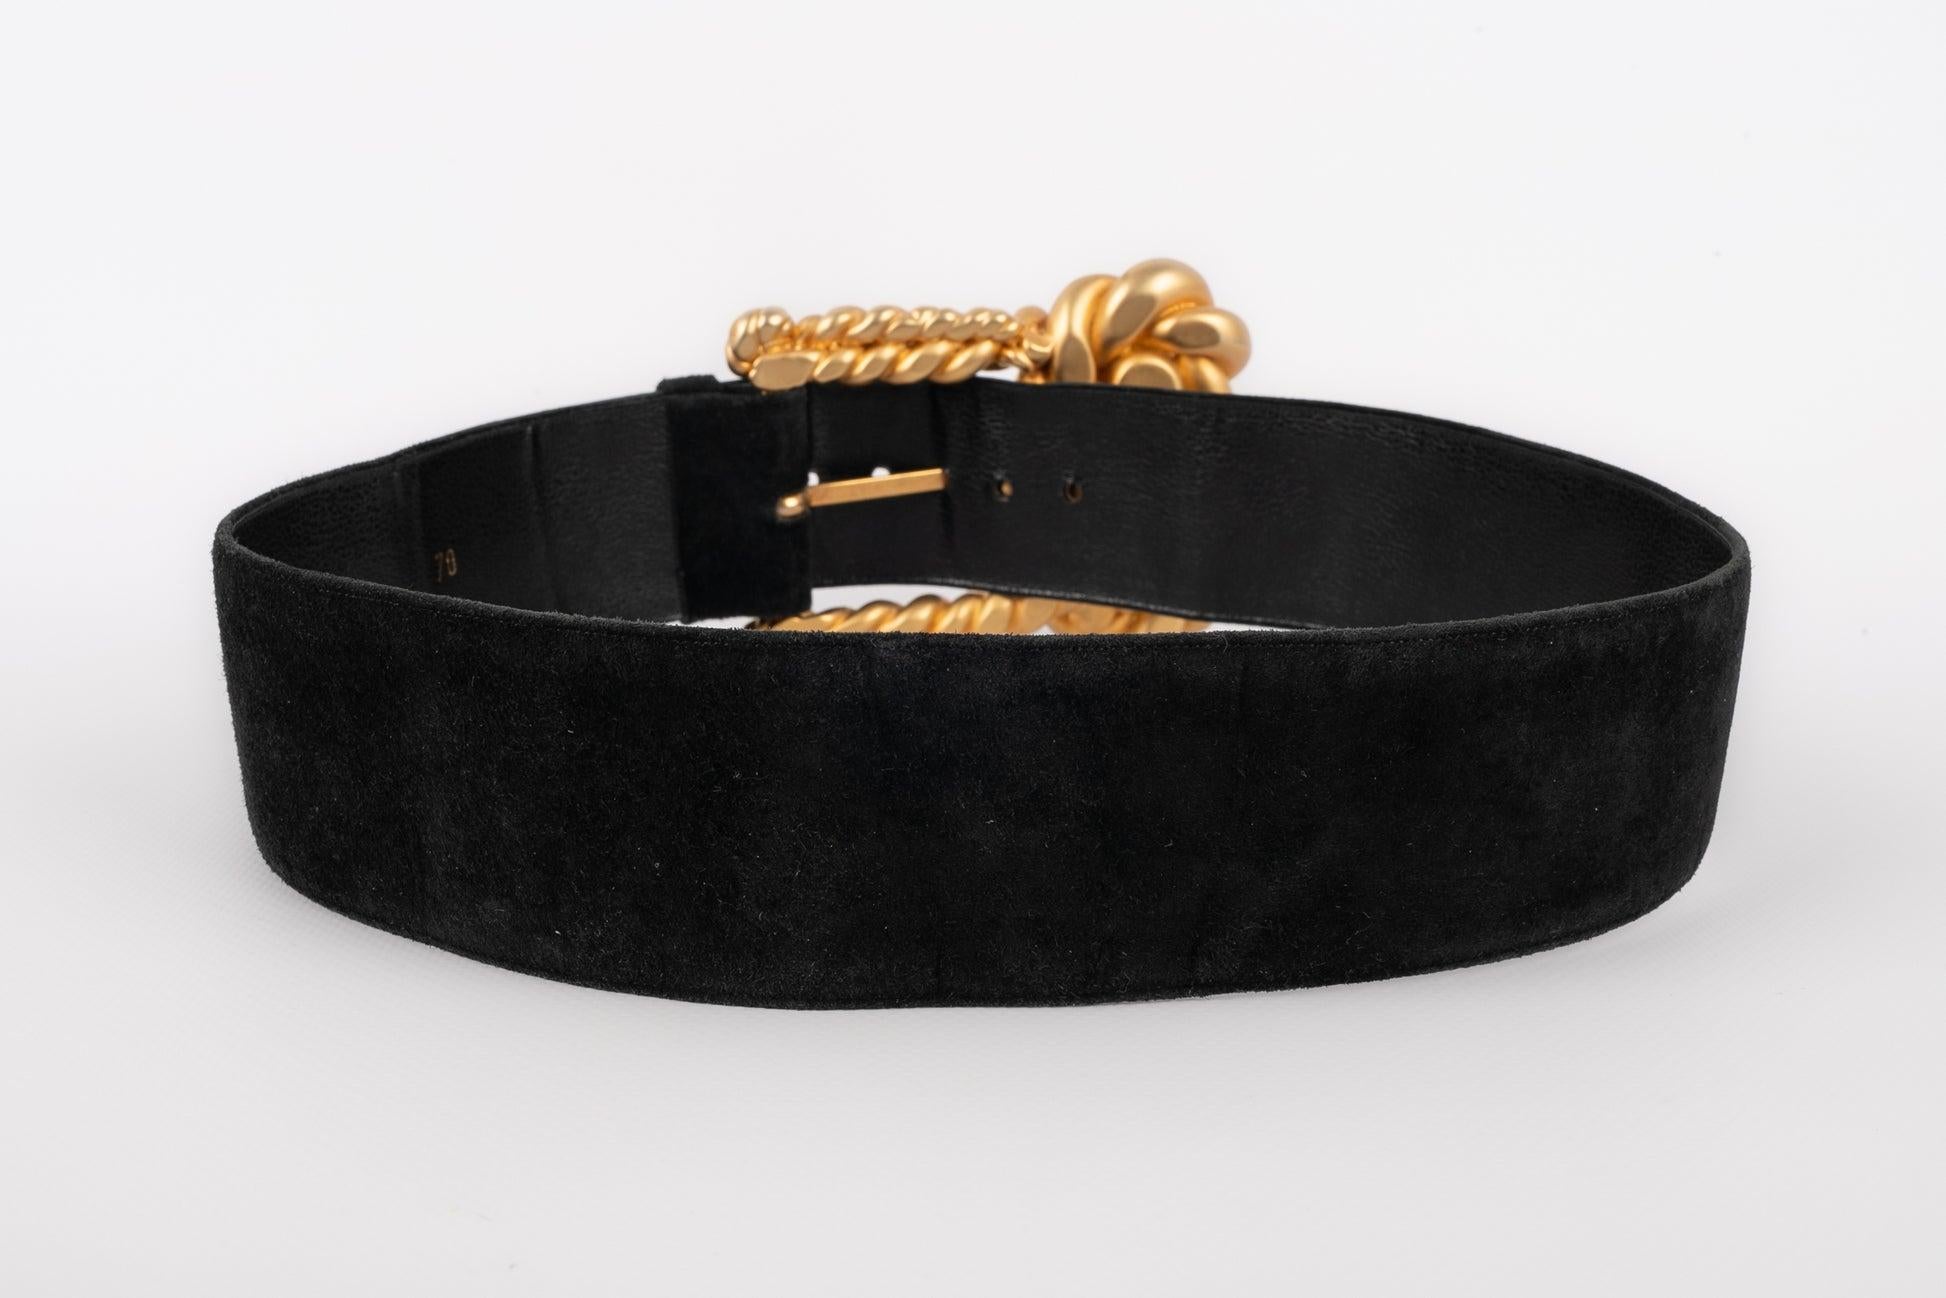 Chanel Black Leather Belt with an Impressive Golden Metal Buckle, 1991 For Sale 2